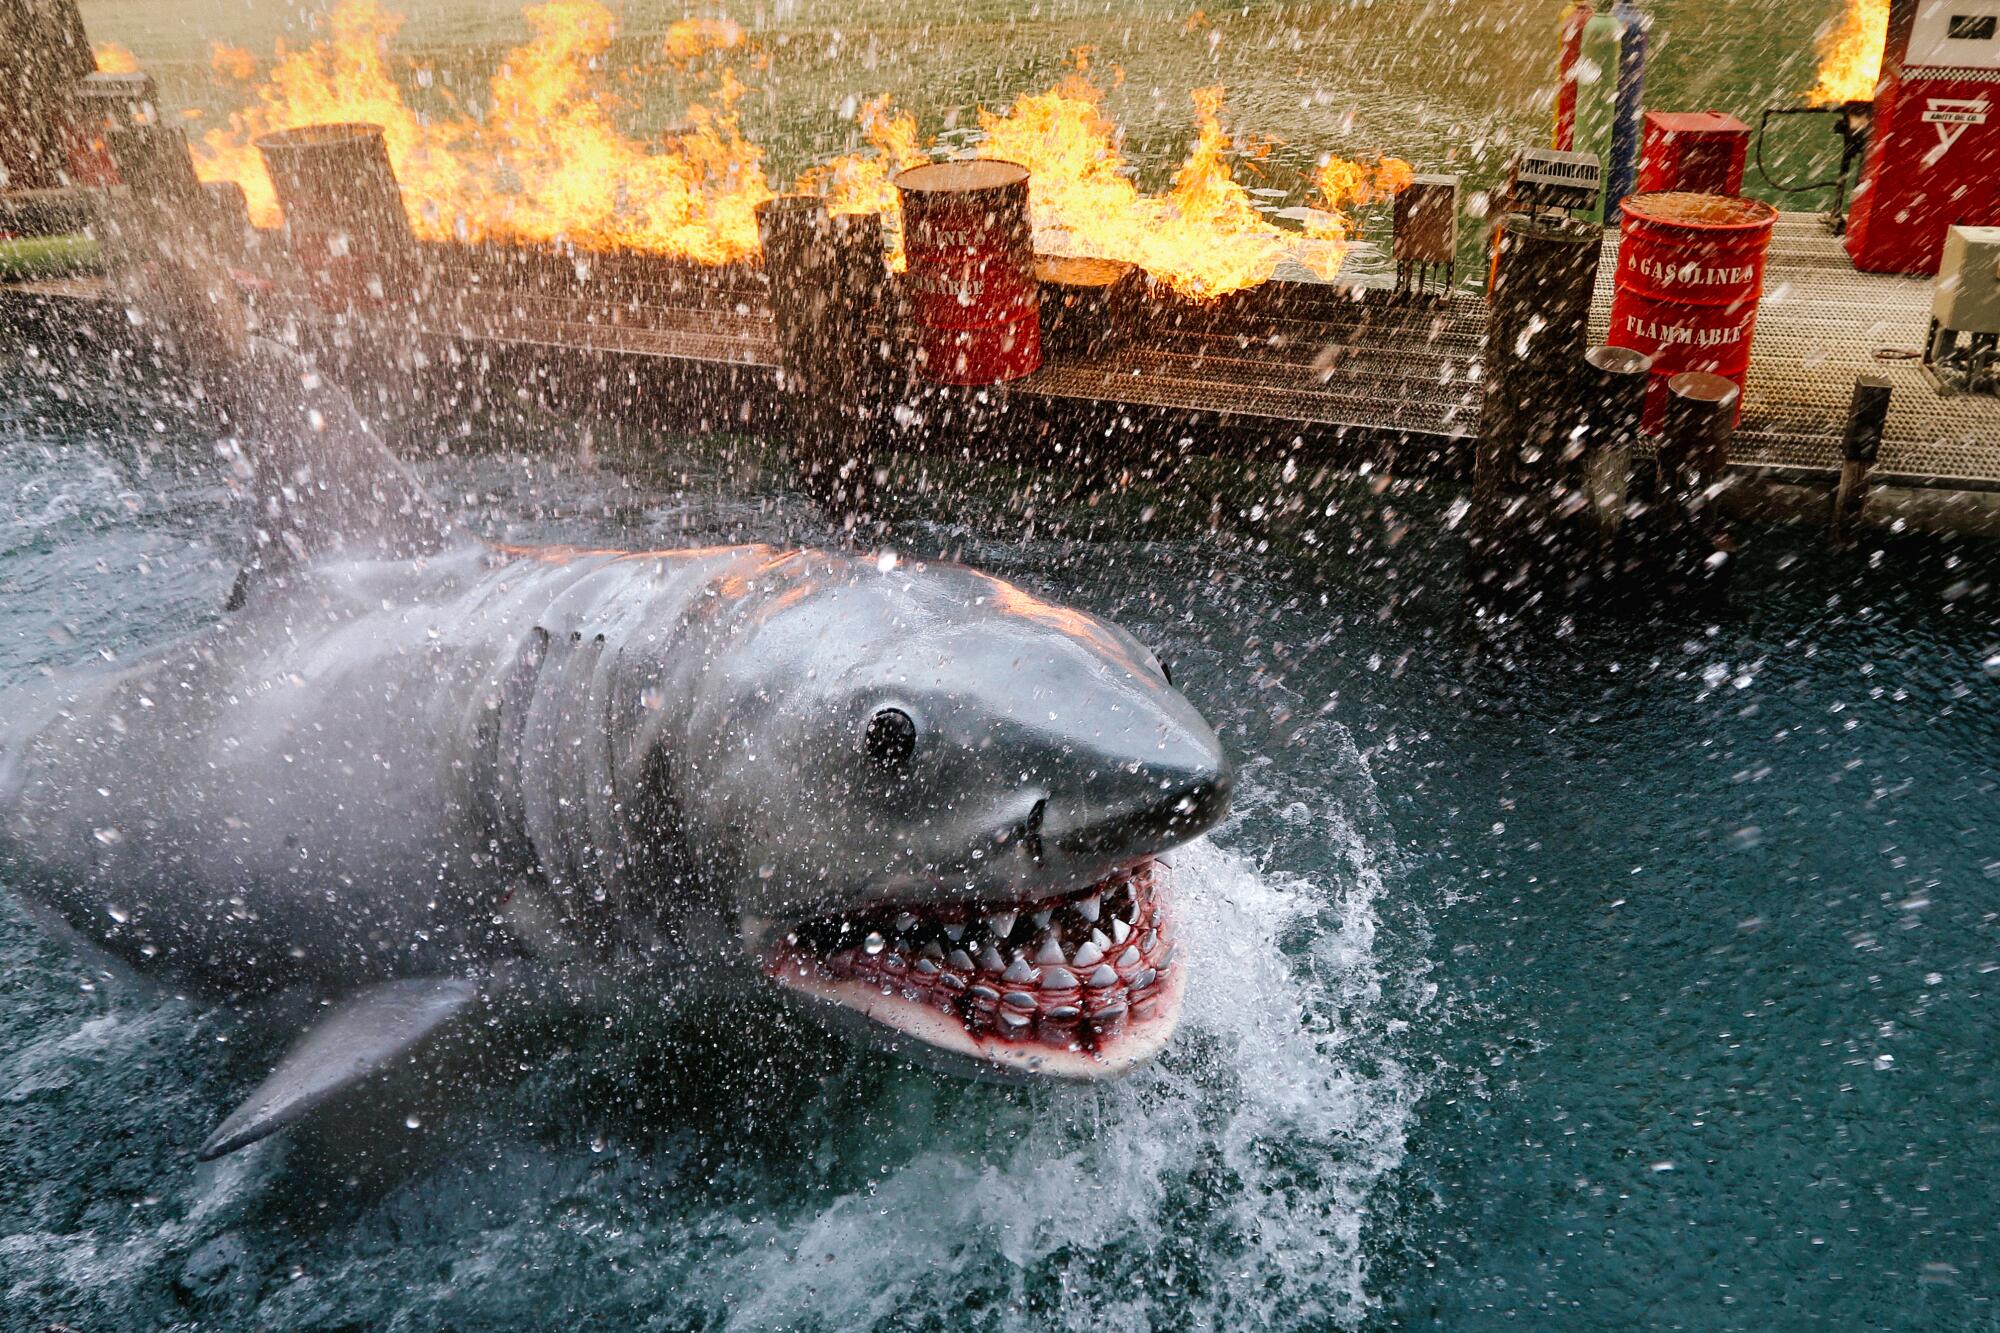 A shark churns the water alongside a burning dock.